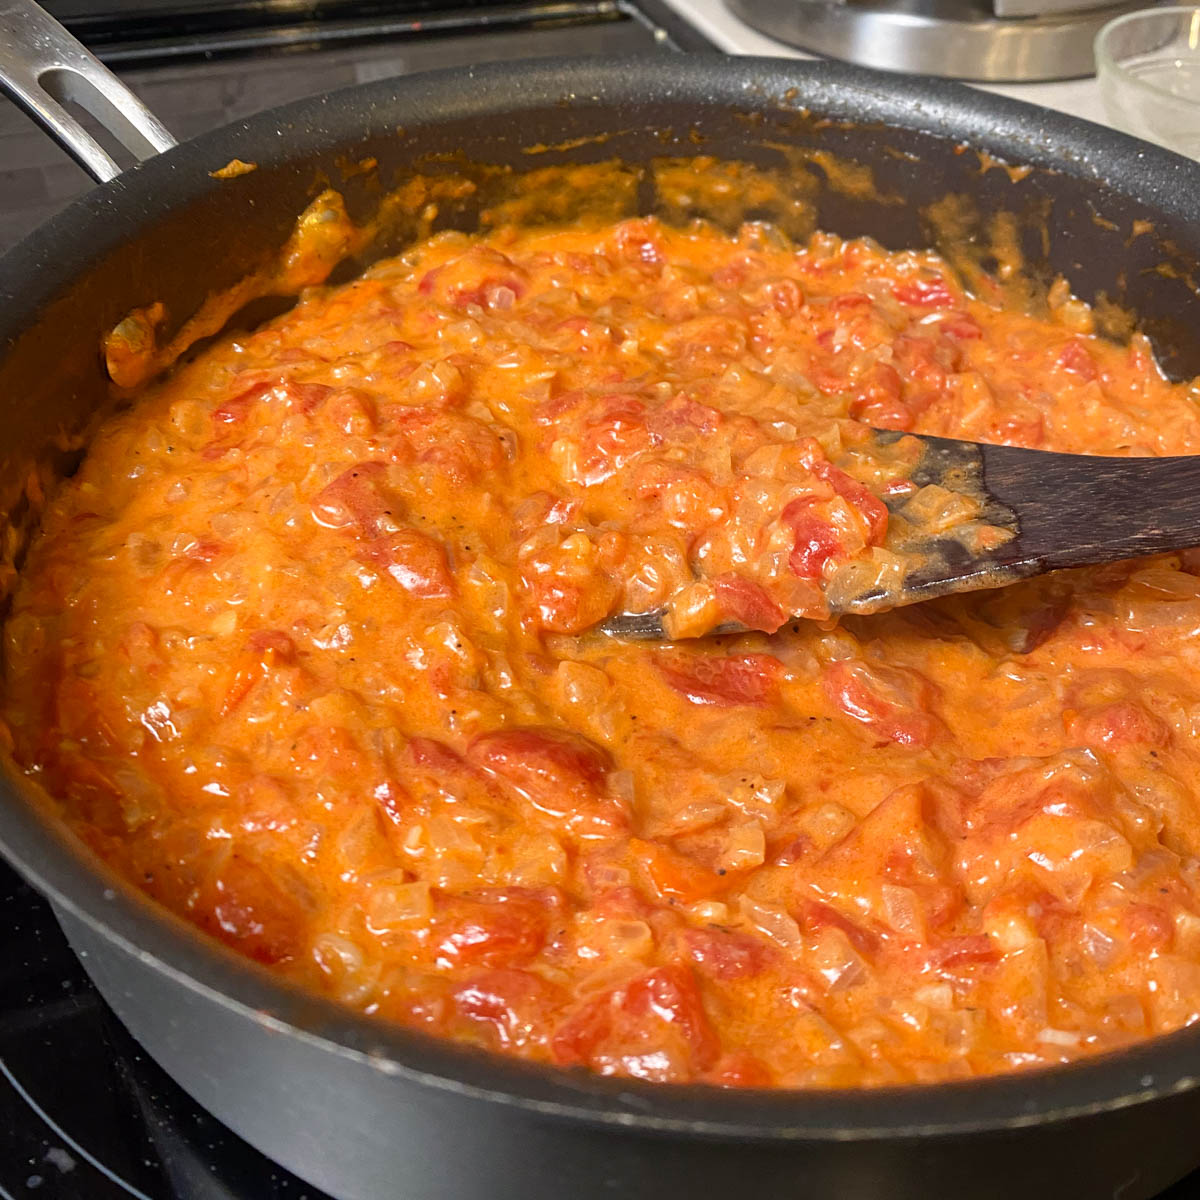 Skillet of creamy tomato sauce simmering.